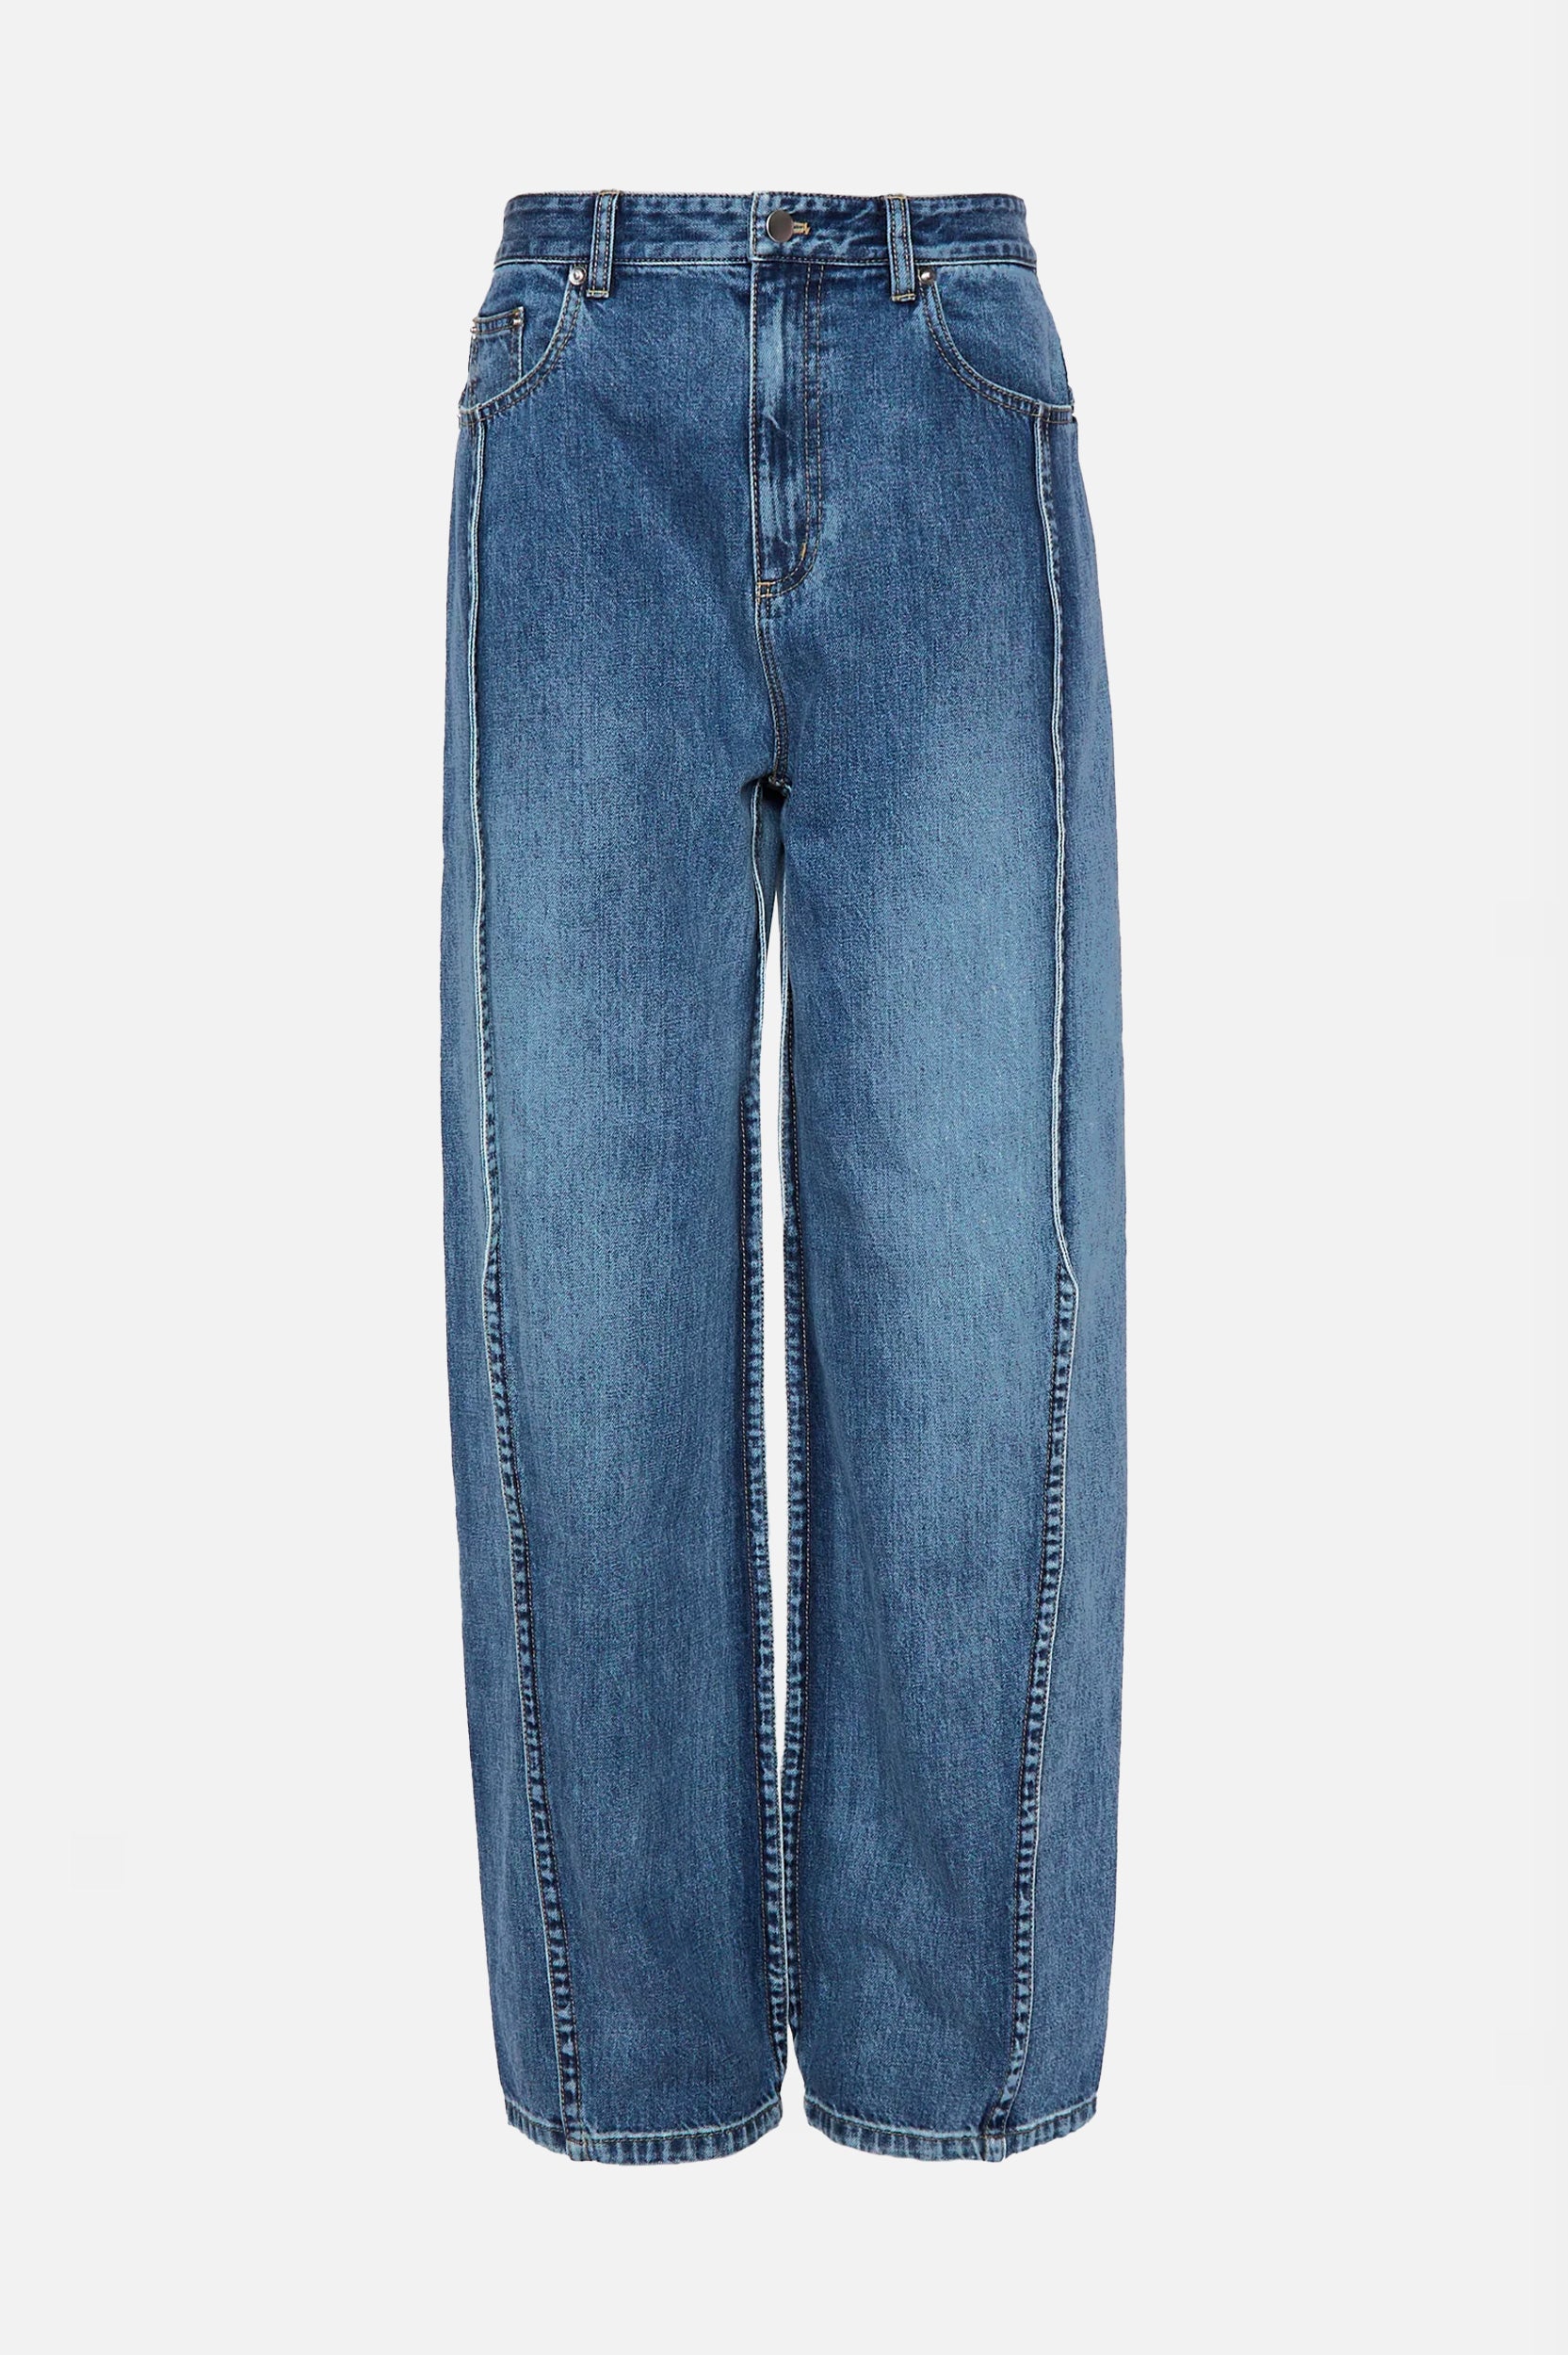 Spring Denim Tuck Jean in Classic Blue - Short